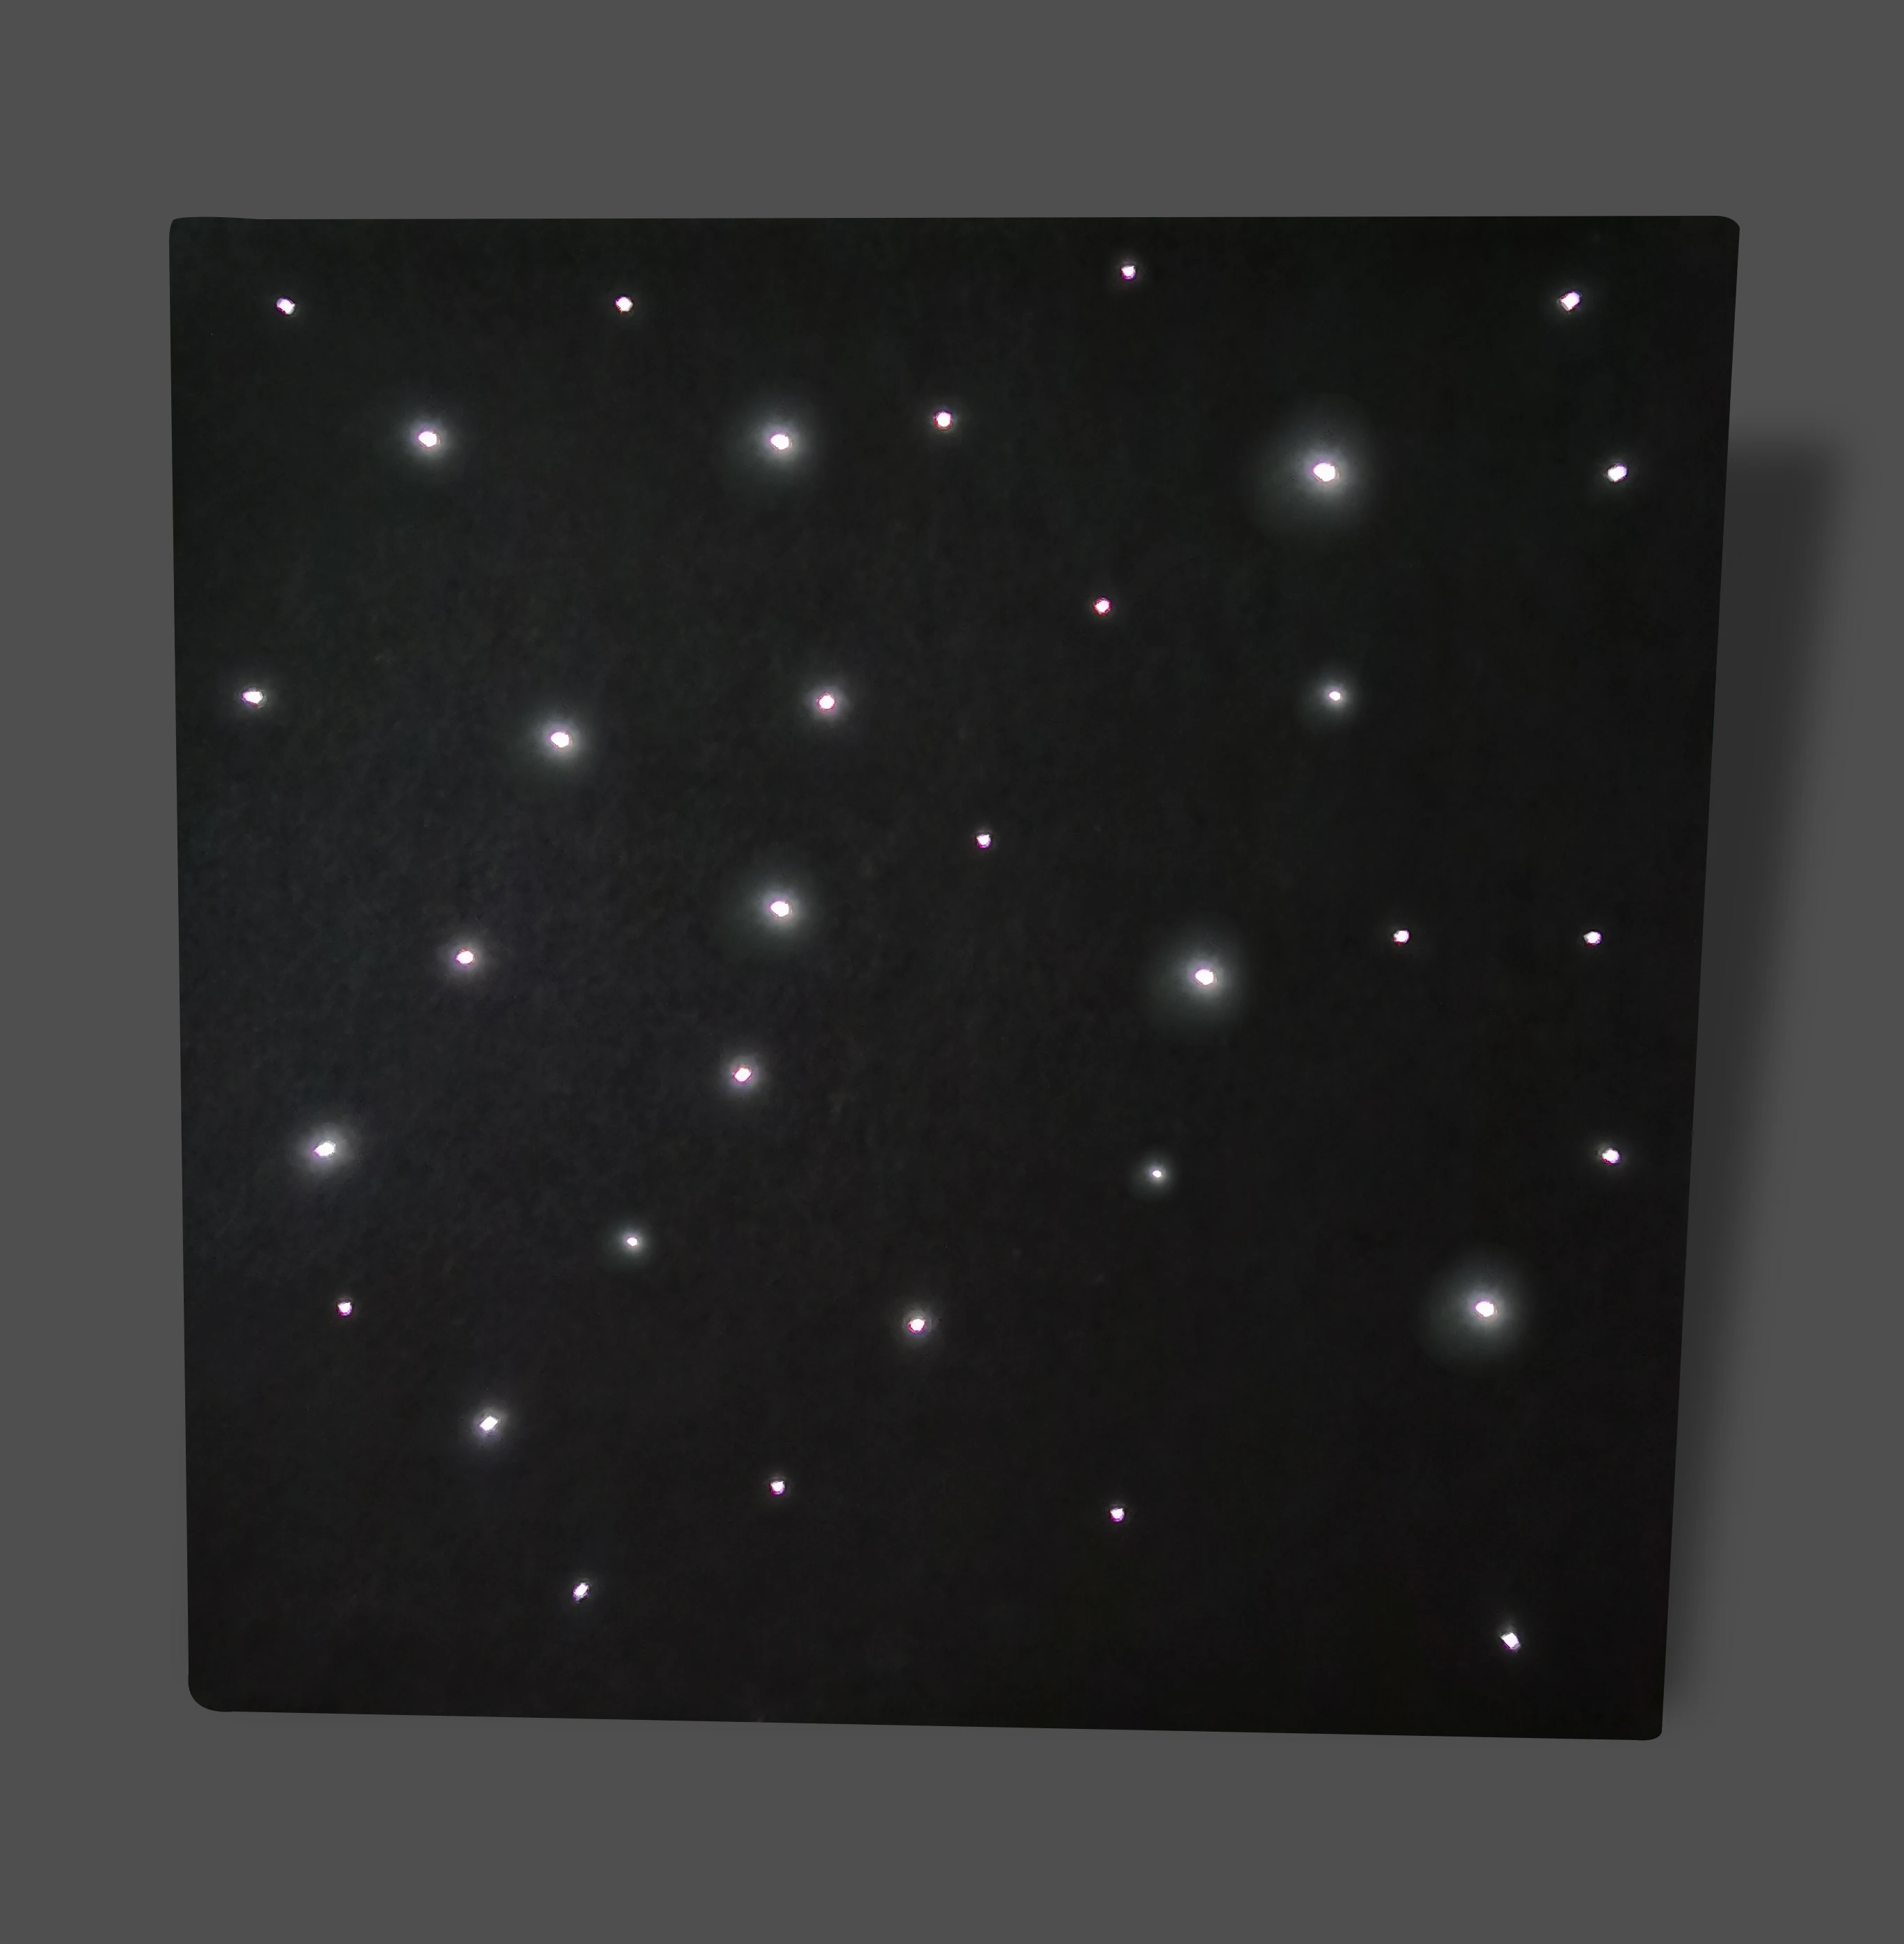 
Fiber optic panel star ceiling tiles for moon shooting universe falling stars 